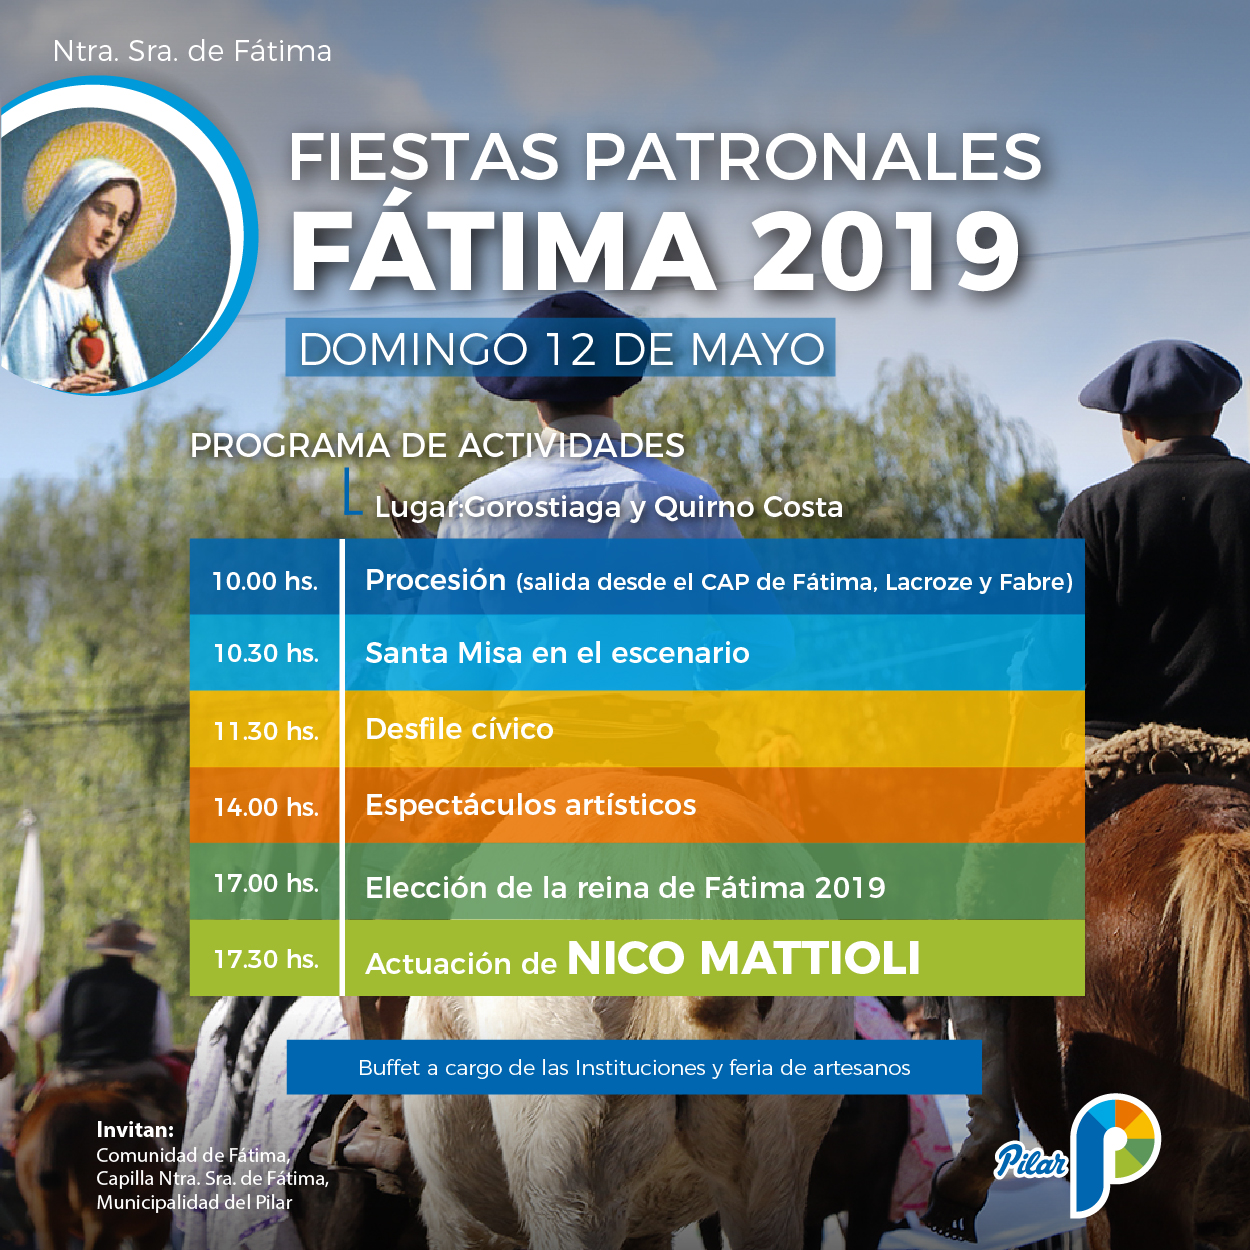  Mañana será la Fiesta Patronal de Fátima